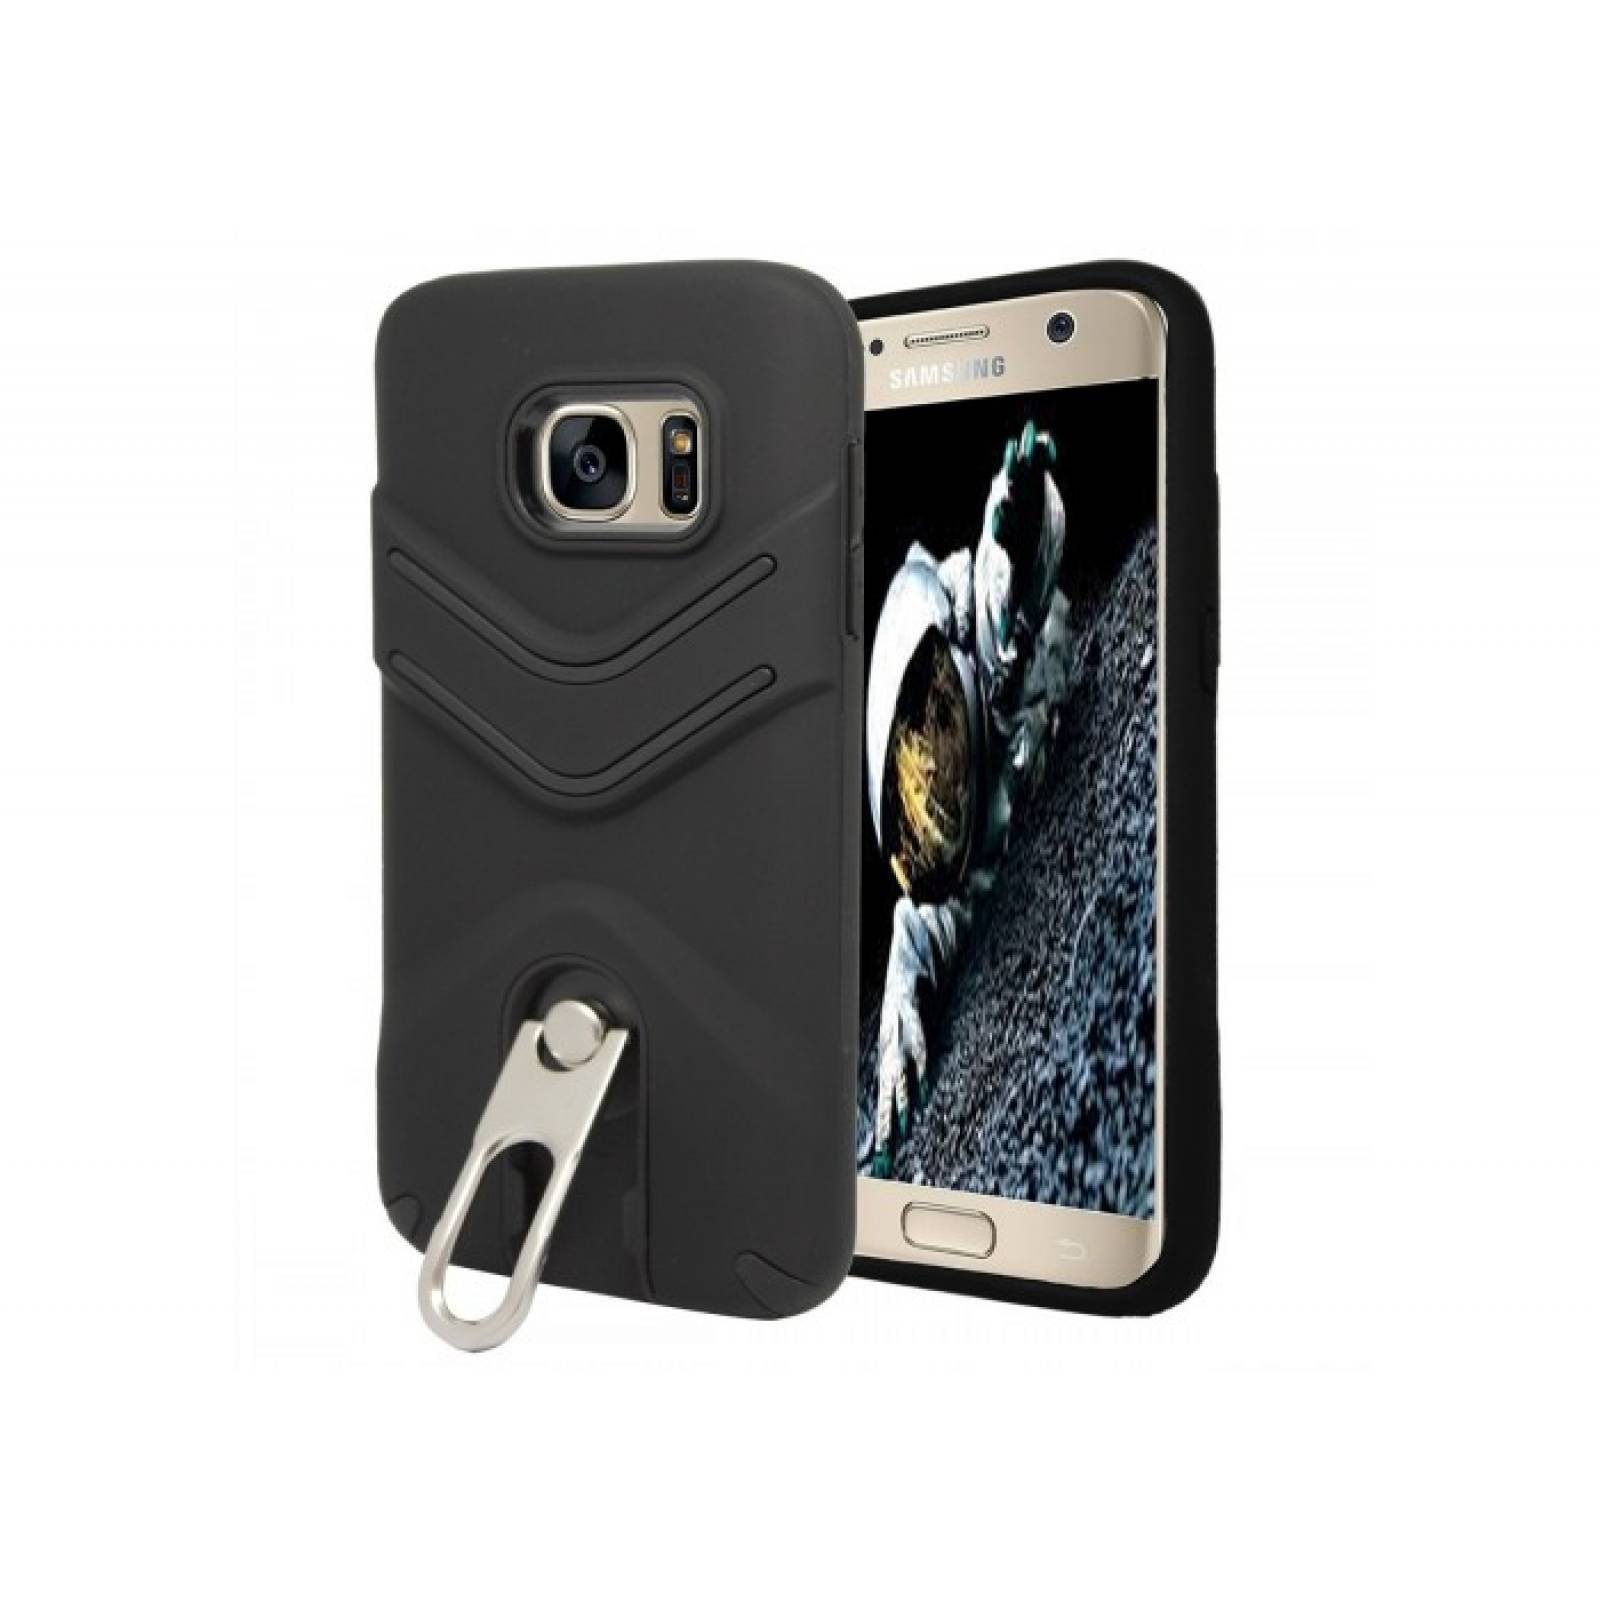 Funda Case Galaxy S7 Edge SM-G935F Protector Uso Rudo Iron Bear